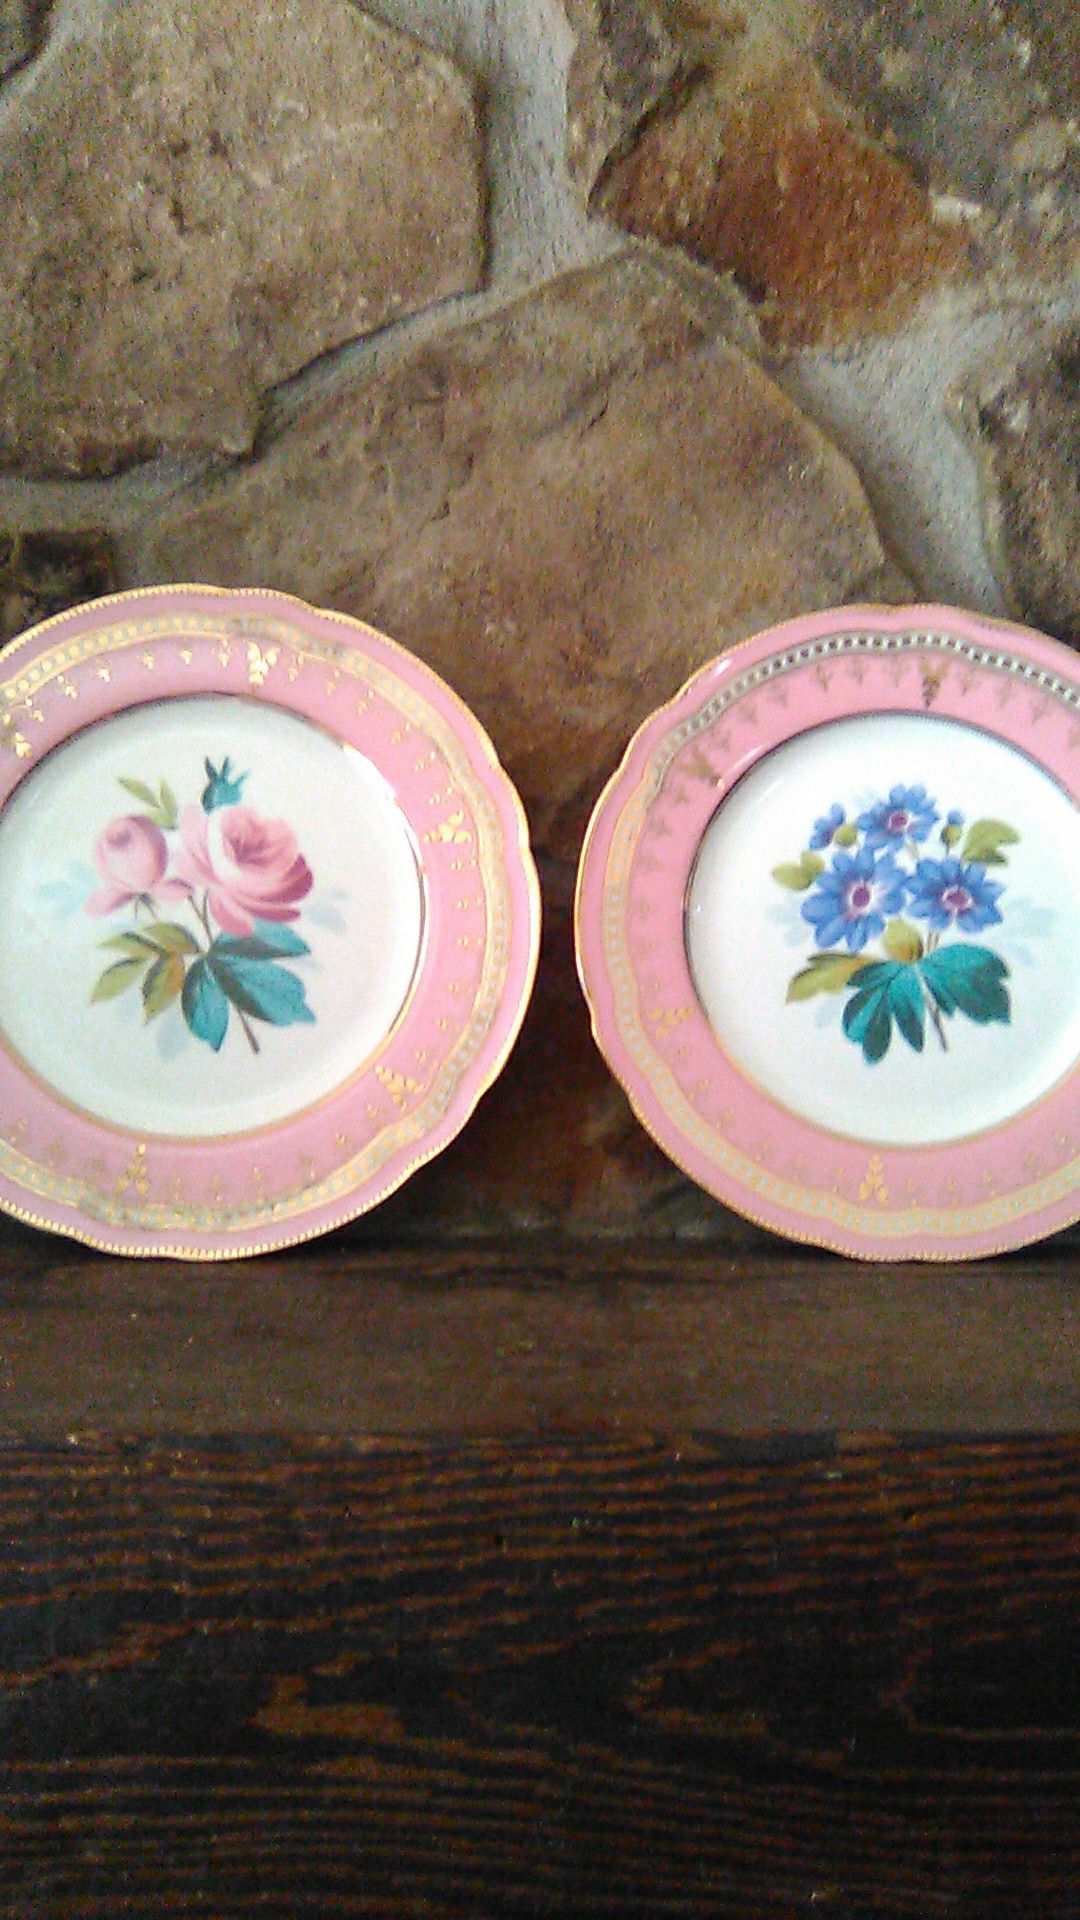 Two's Company decorative plates